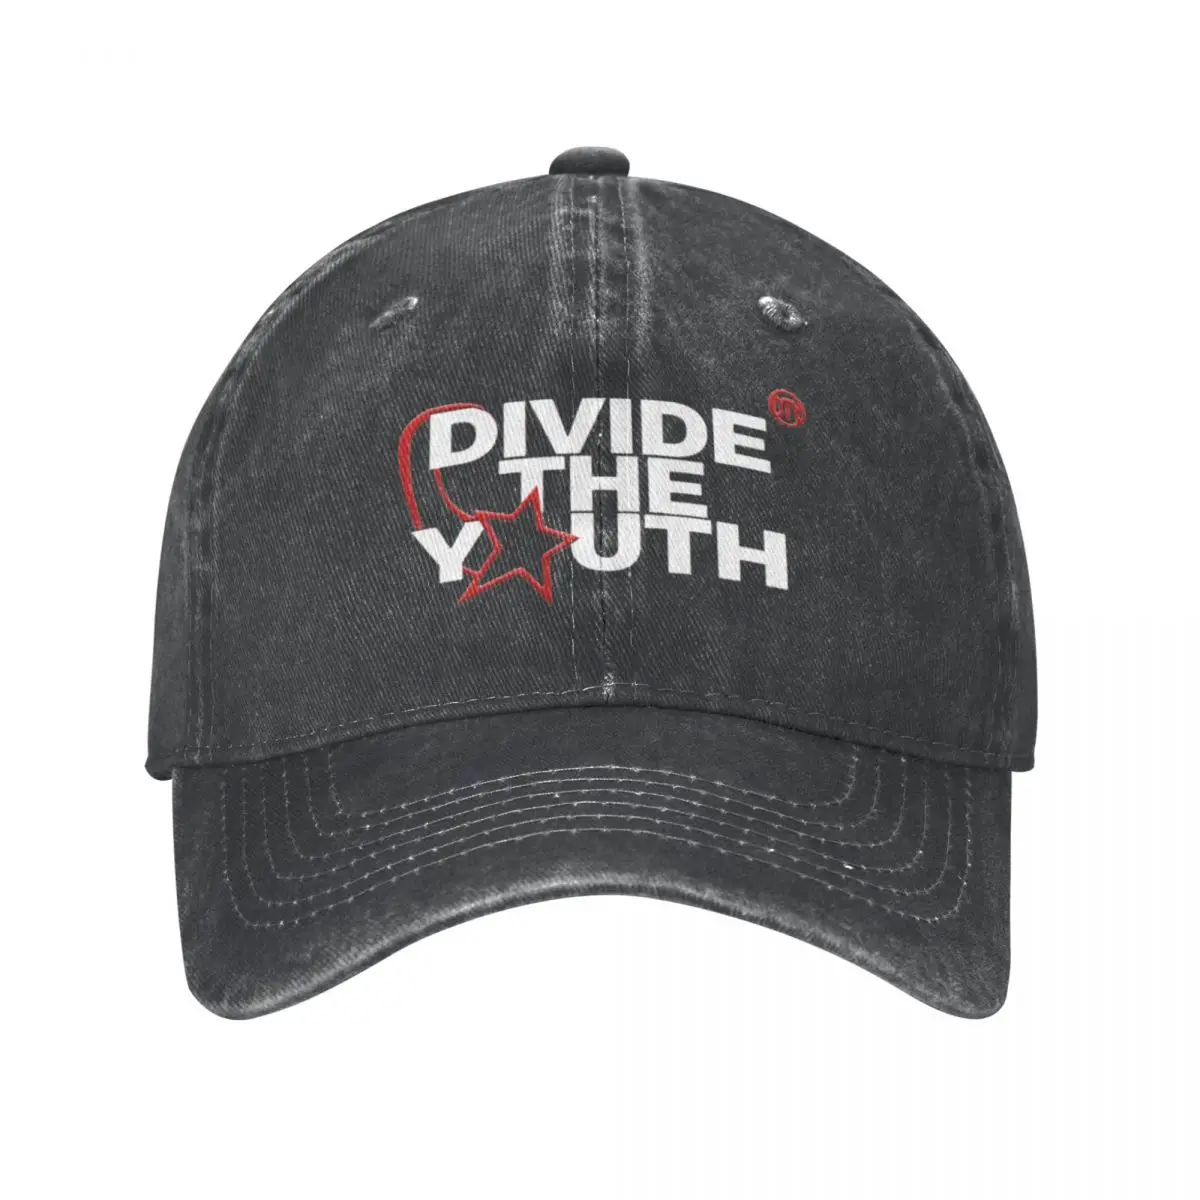 

Divide The Youth Cap Cowboy Hat beach military tactical cap Caps women Men's